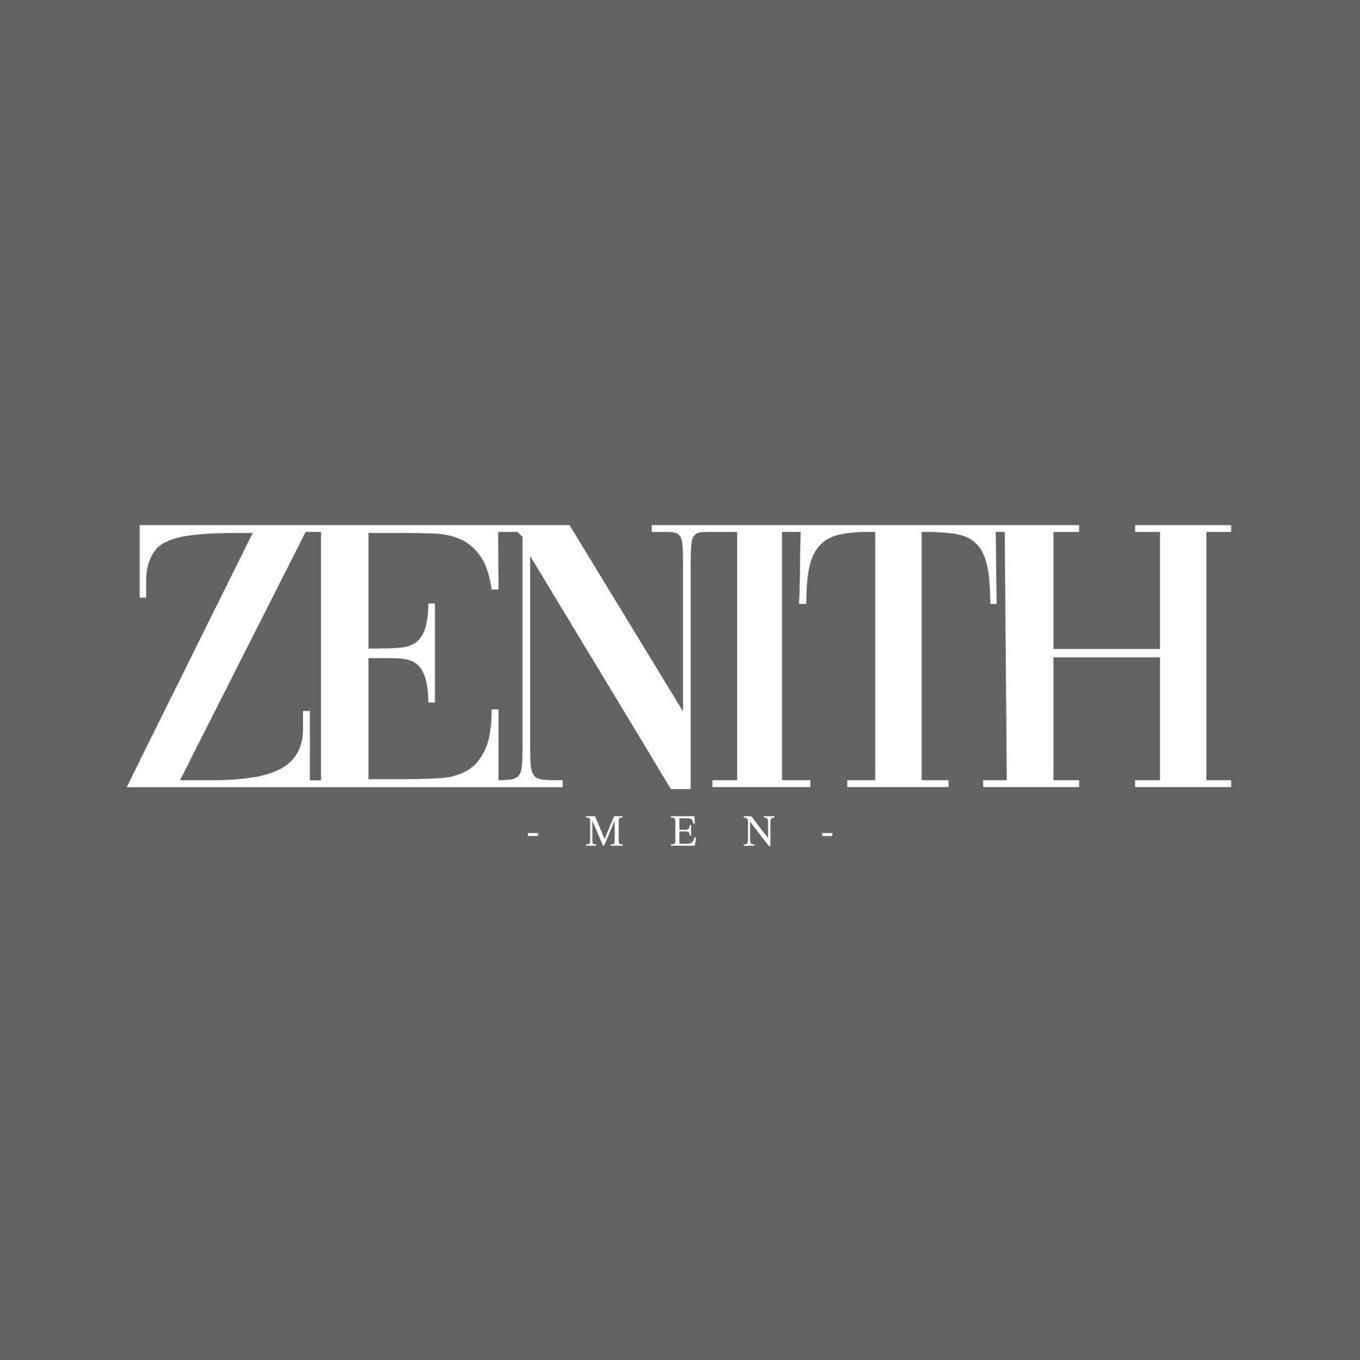 Zenith Men Carrizal, Avenida de Carlos V, 43, 35240, Ingenio